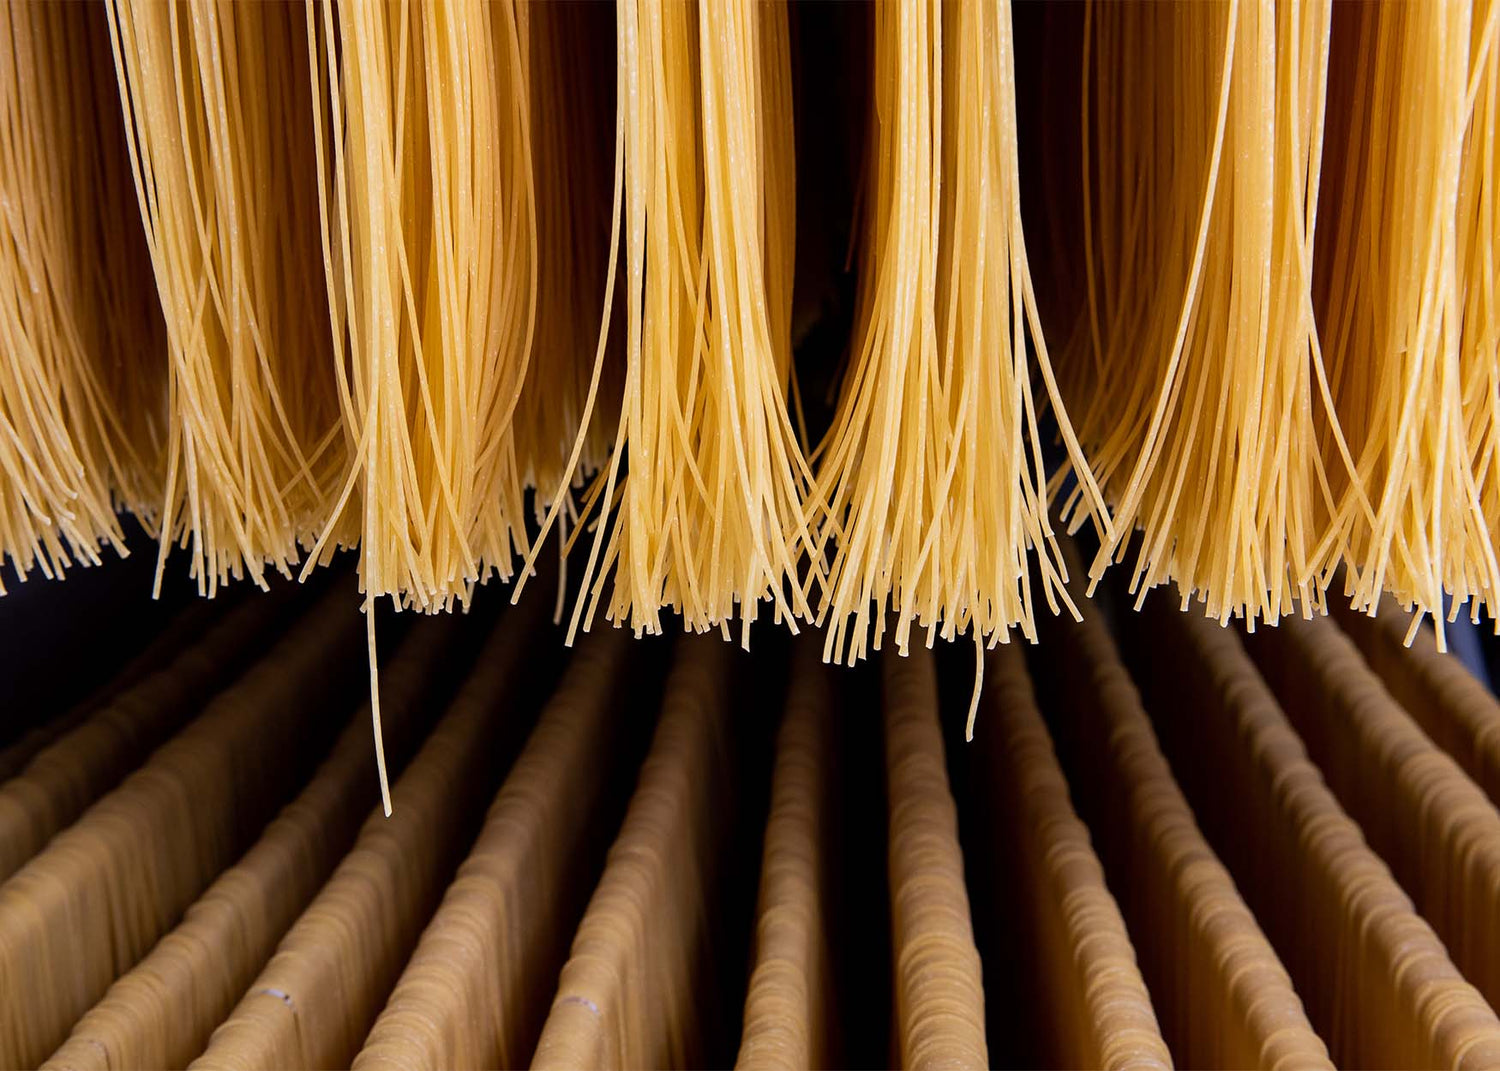 Handmade Pasta Drying on Wooden Spool